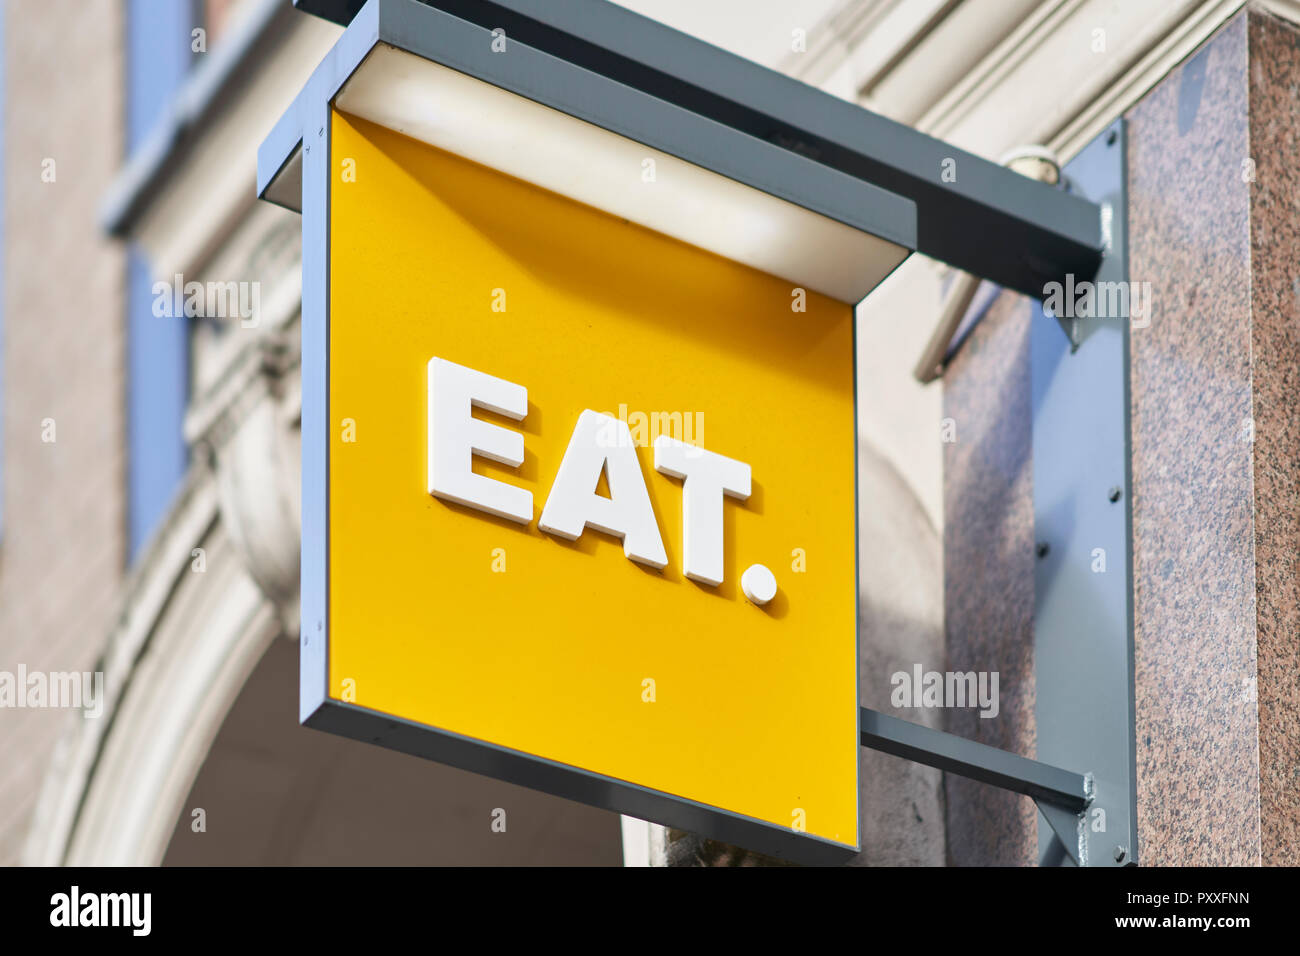 Eat Restaurant Sign, London. Stock Photo